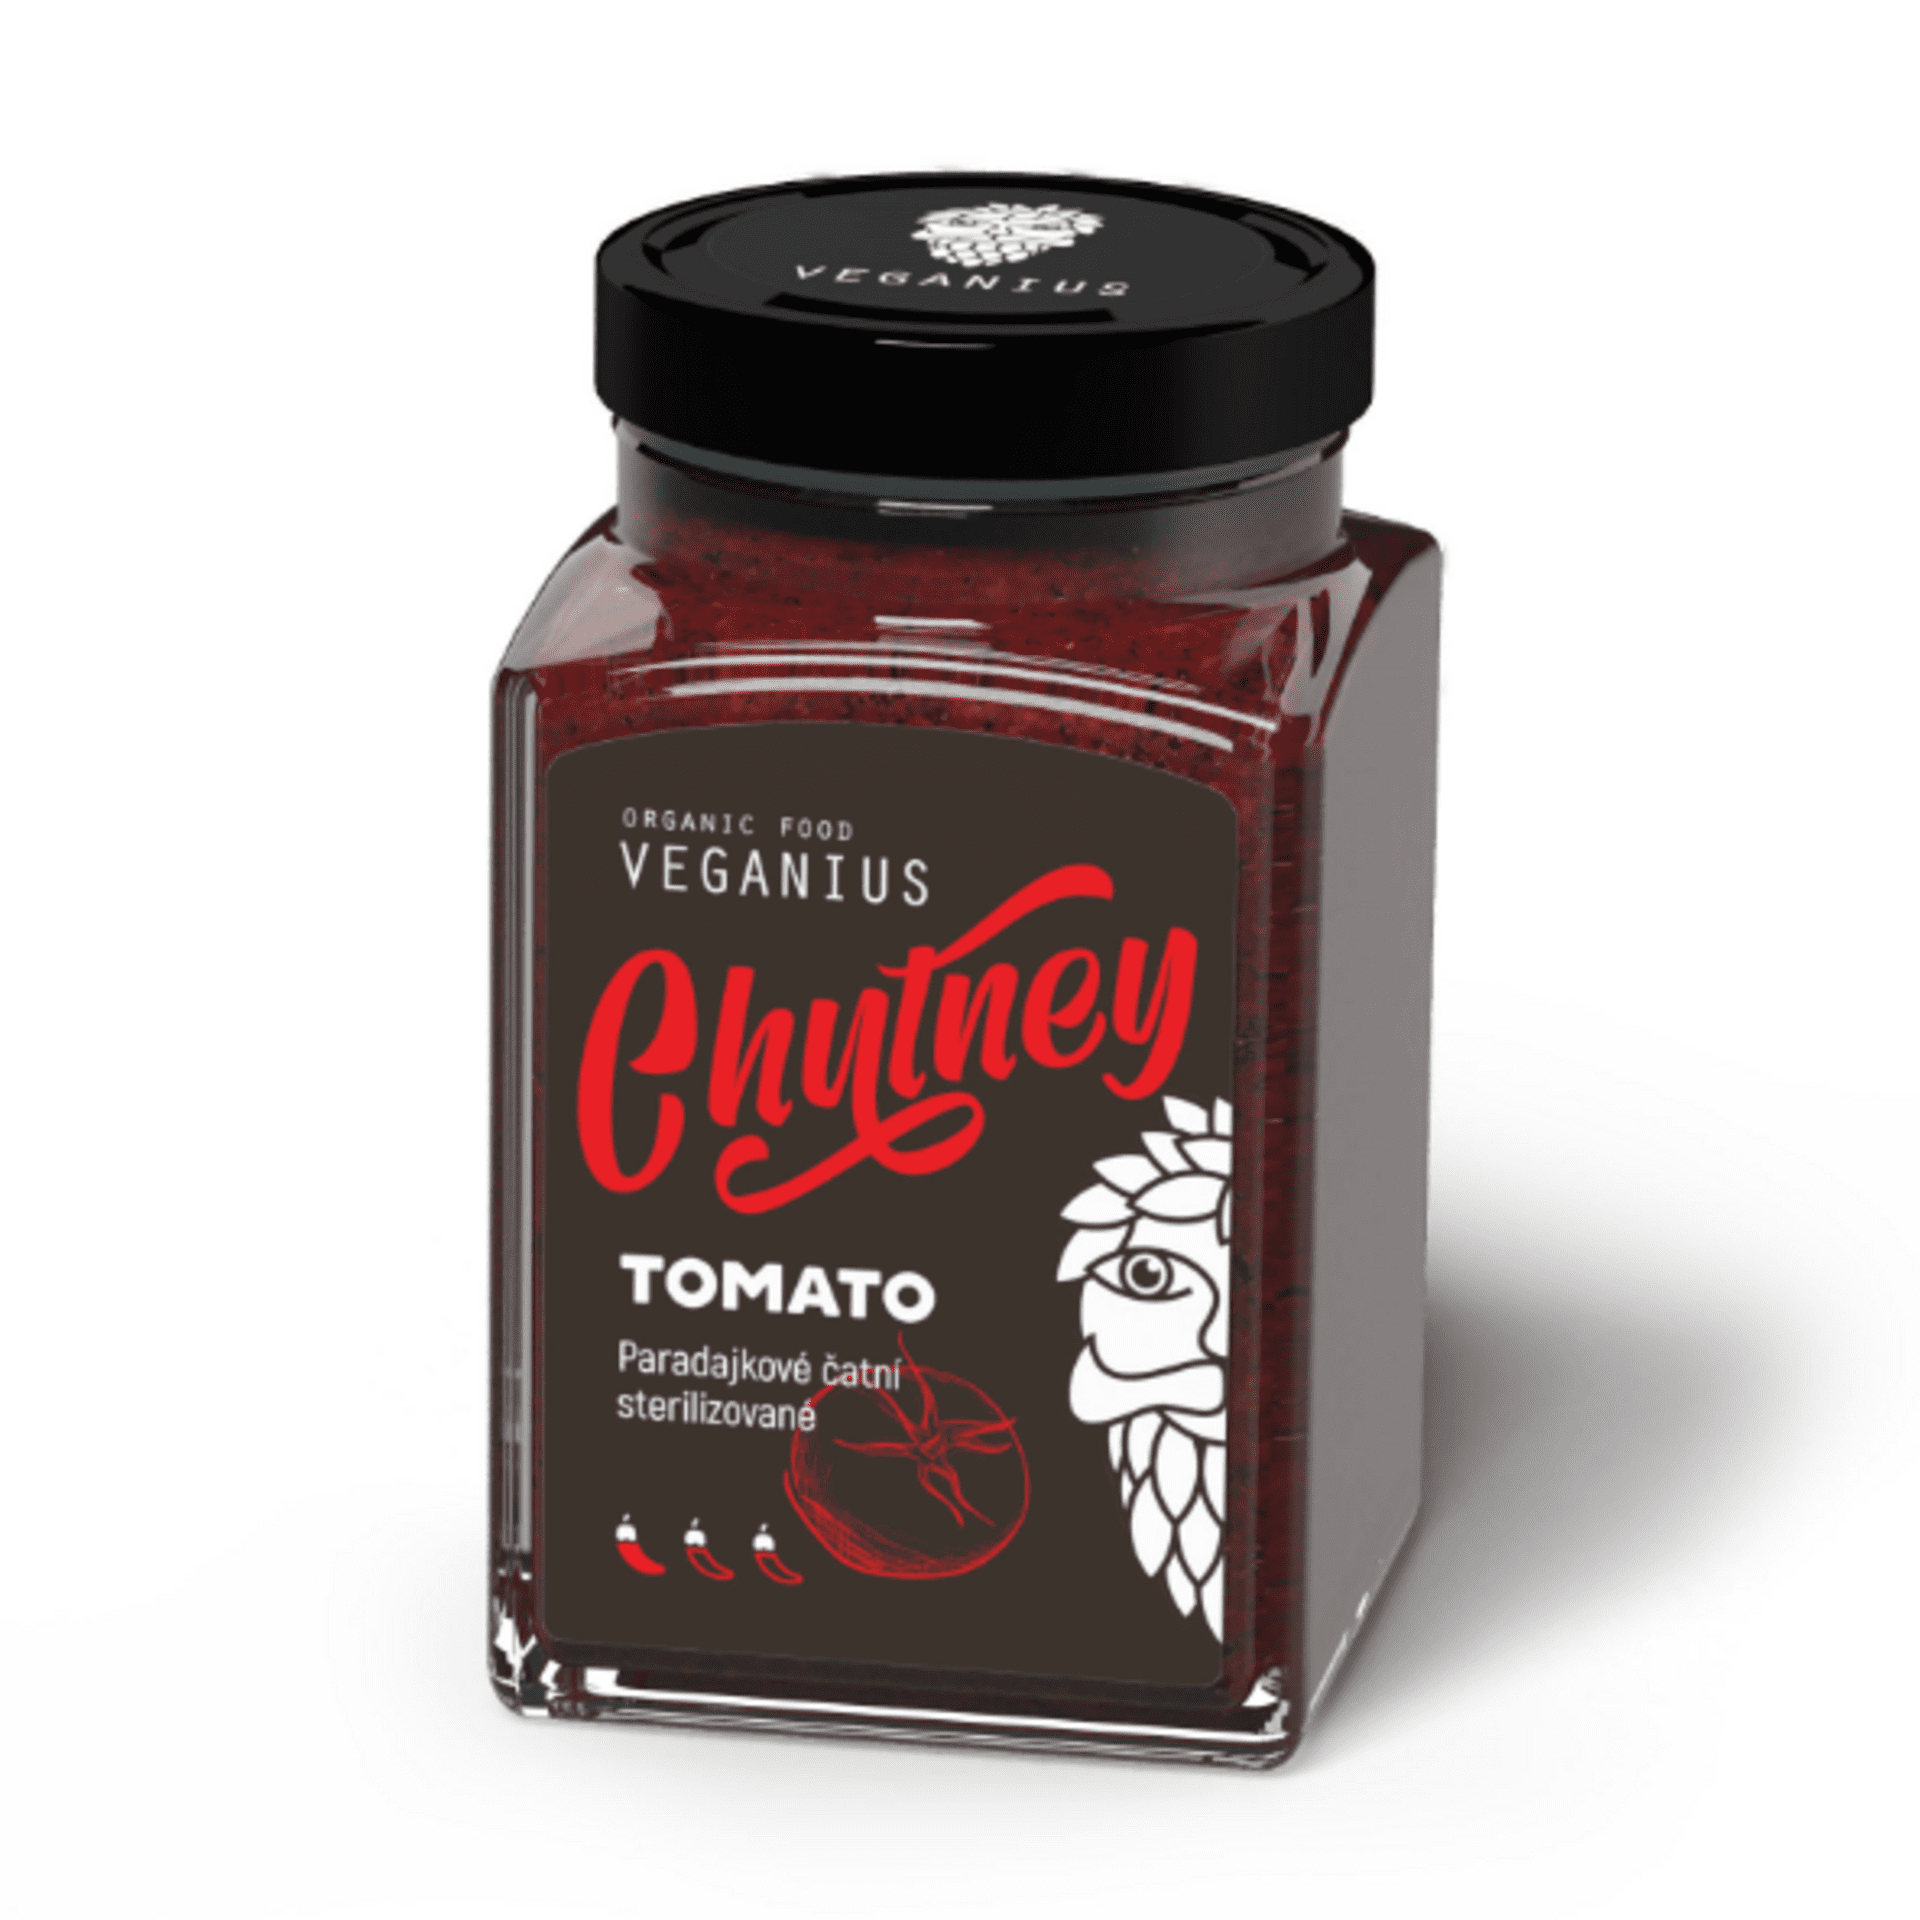 E-shop Veganius Chutney tomato jemne pálivé 250 ml